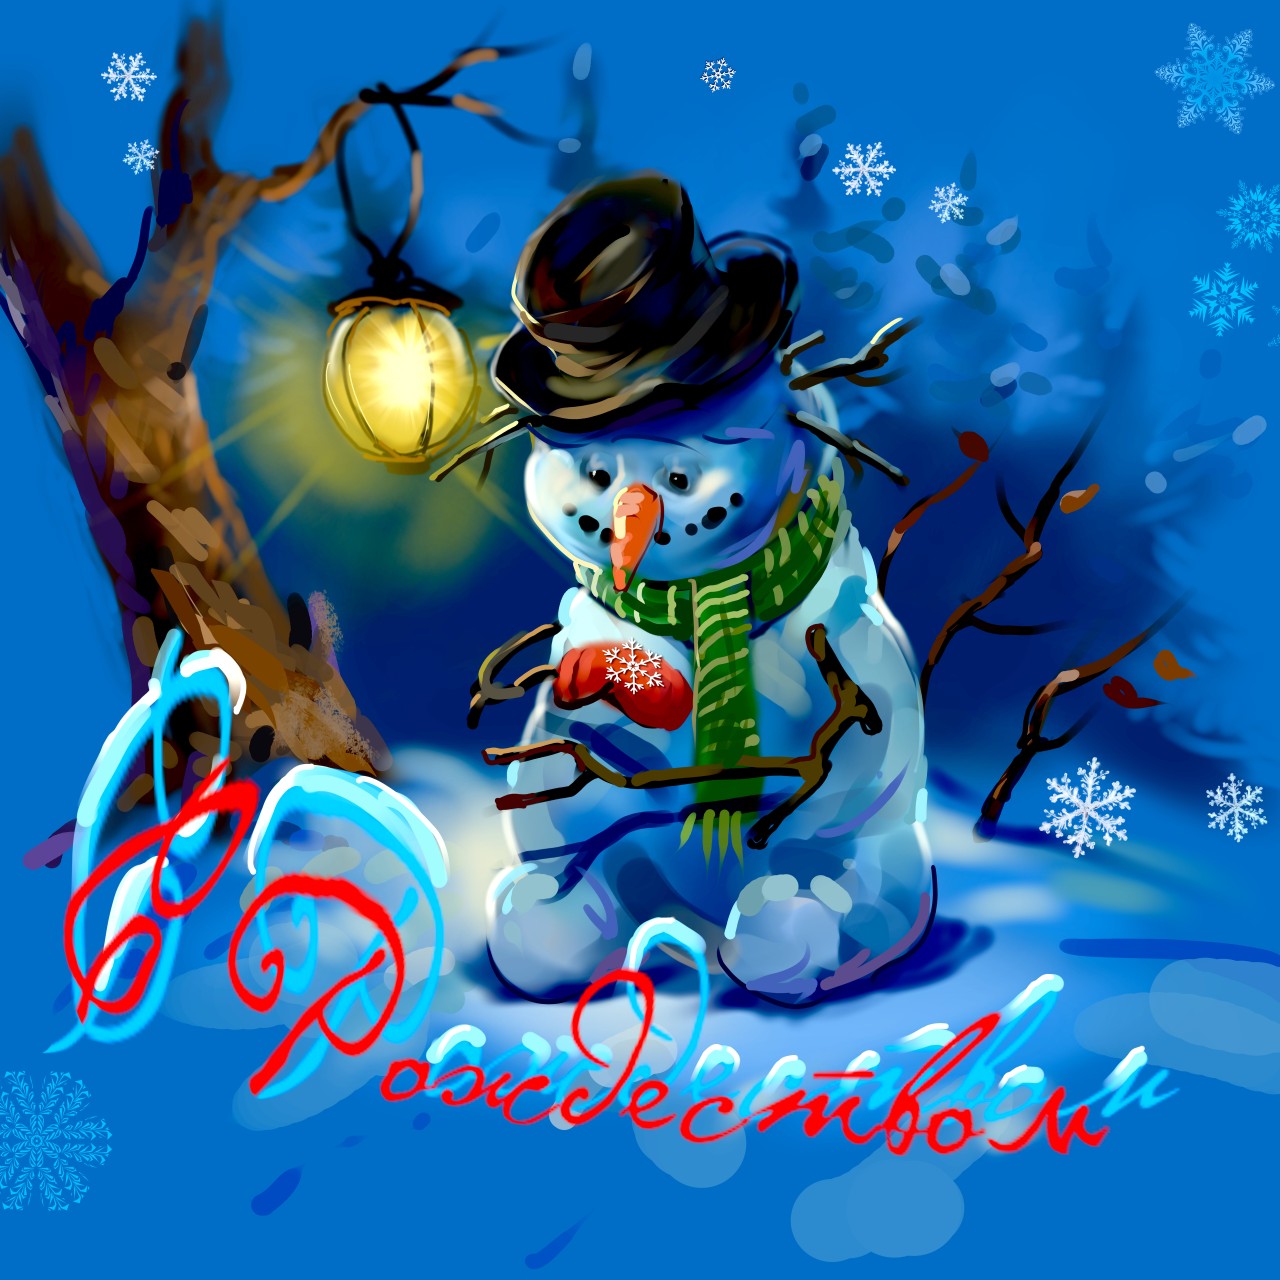 Снежинка на ладошке ( Серия "Снеговик и снежинка") Эскиз для марки